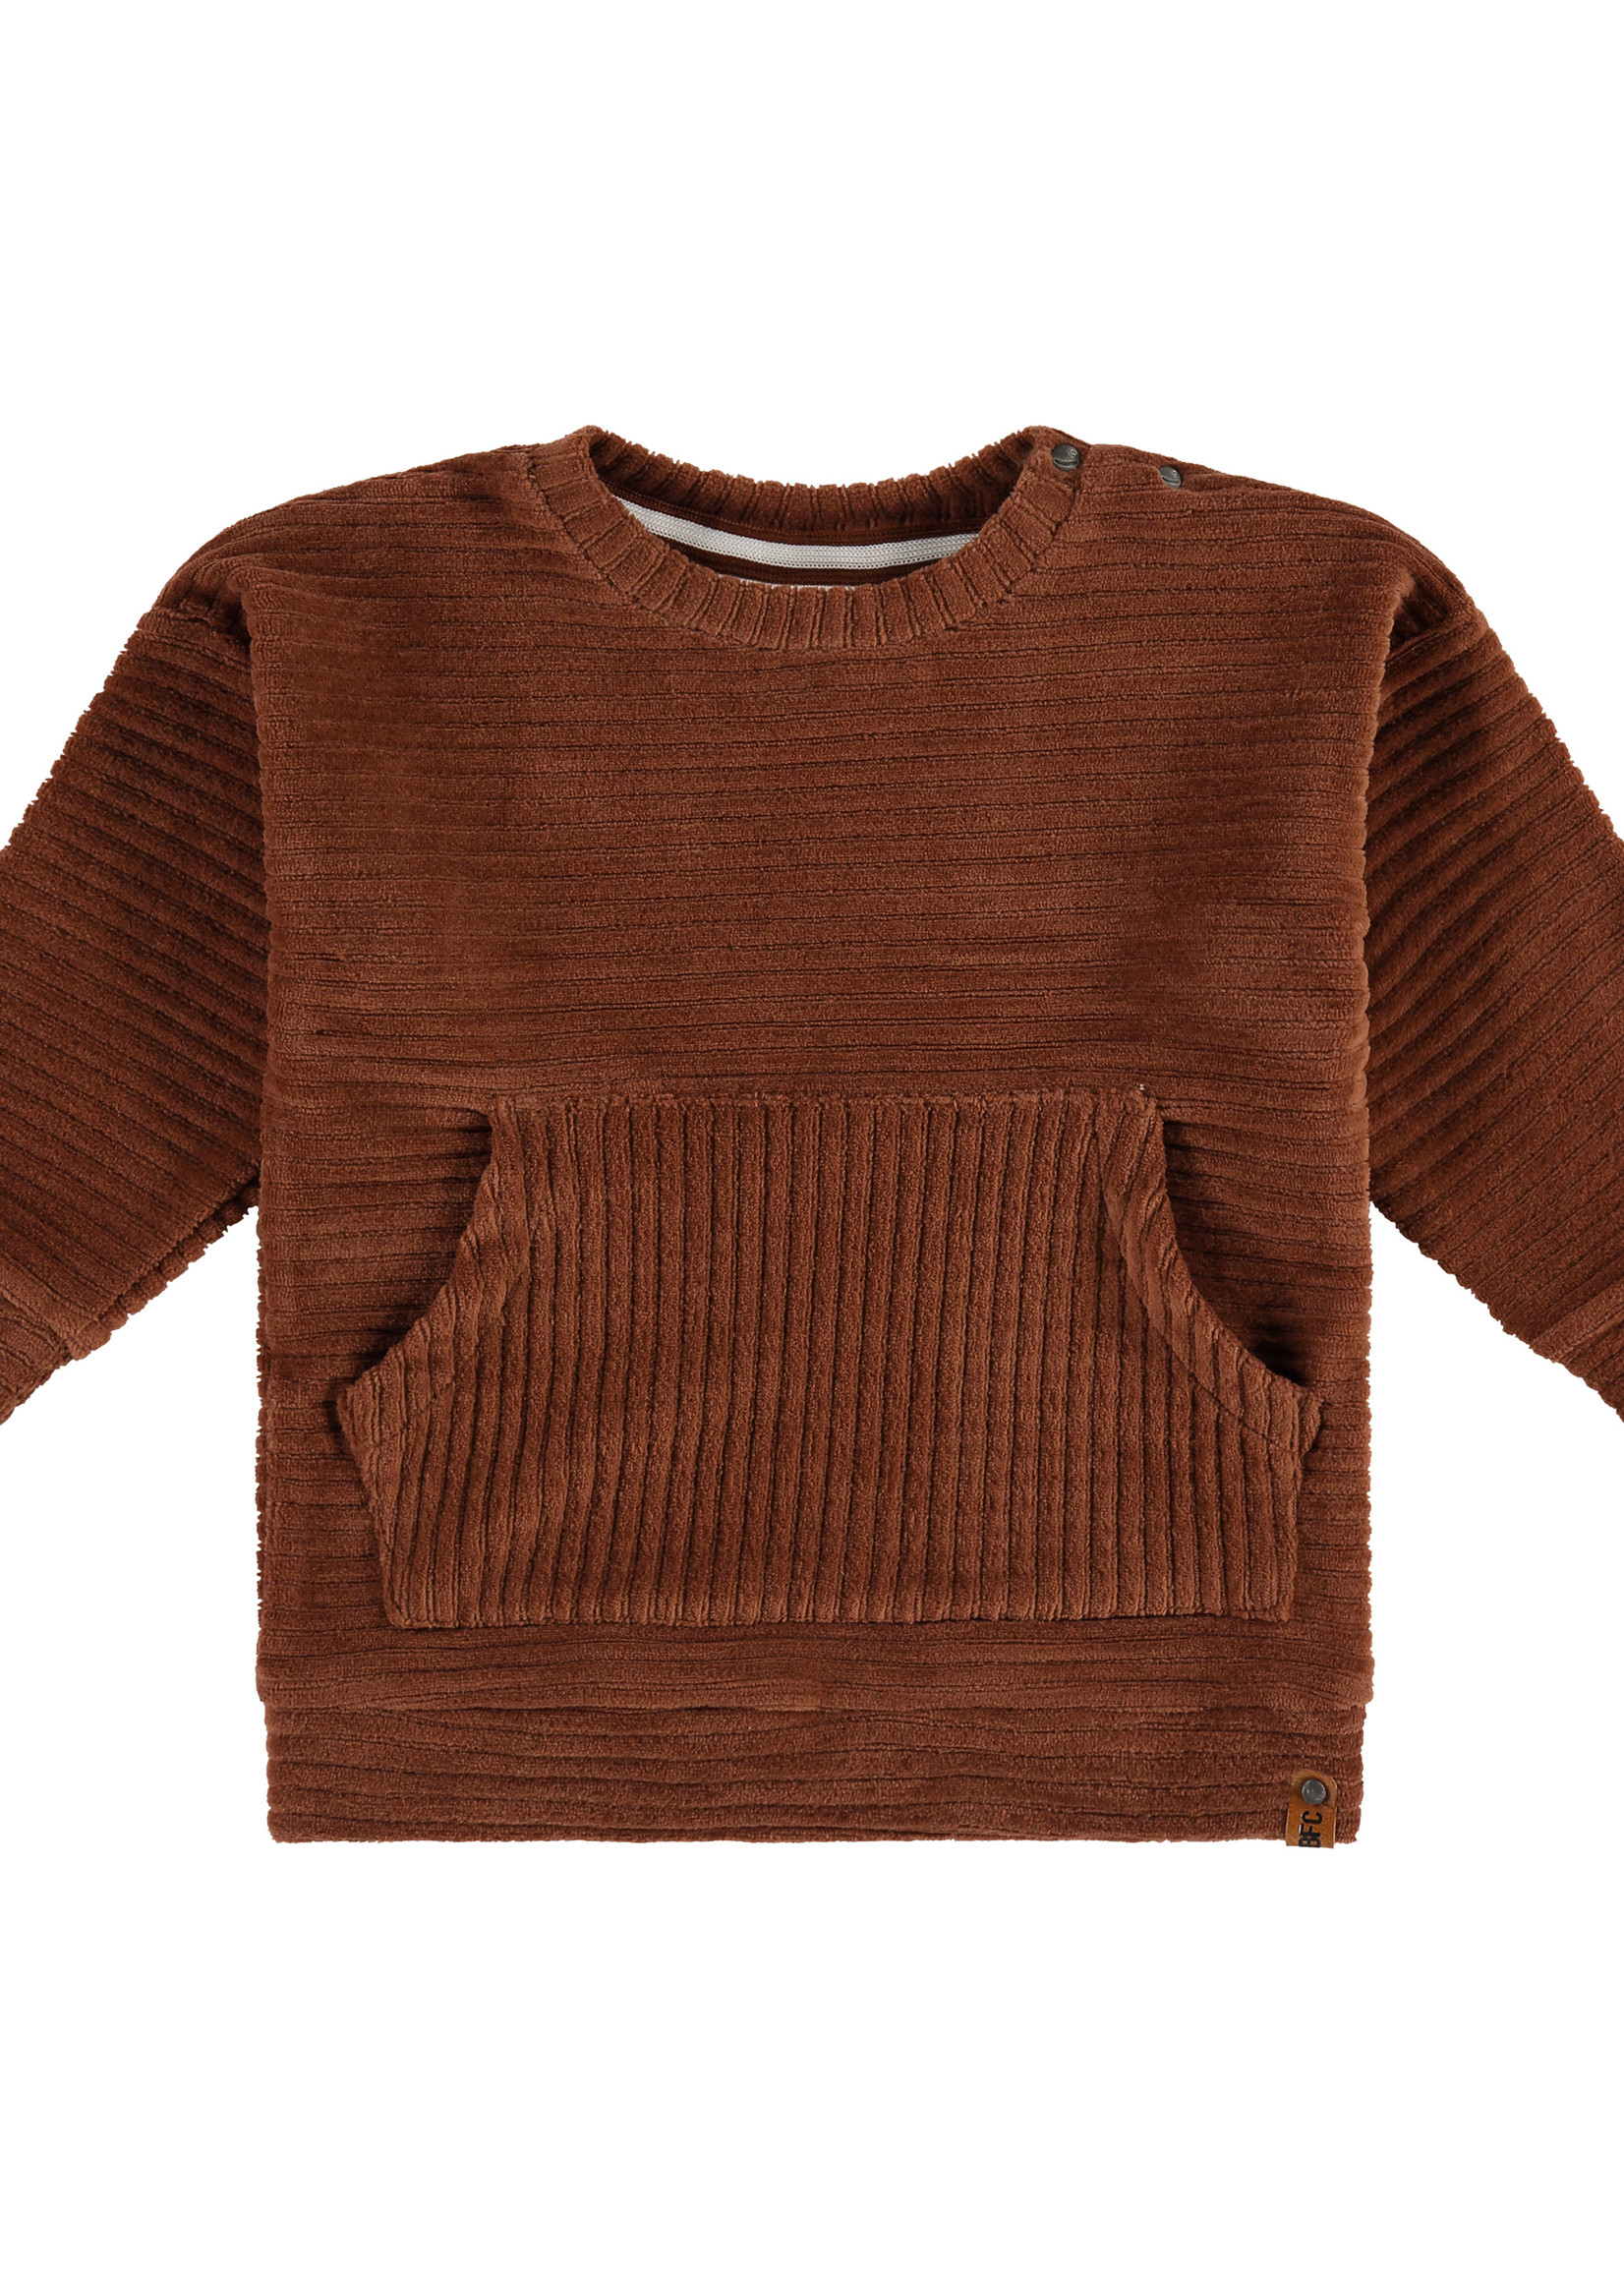 Babyface boys sweatshirt, caramel, BBE22407451